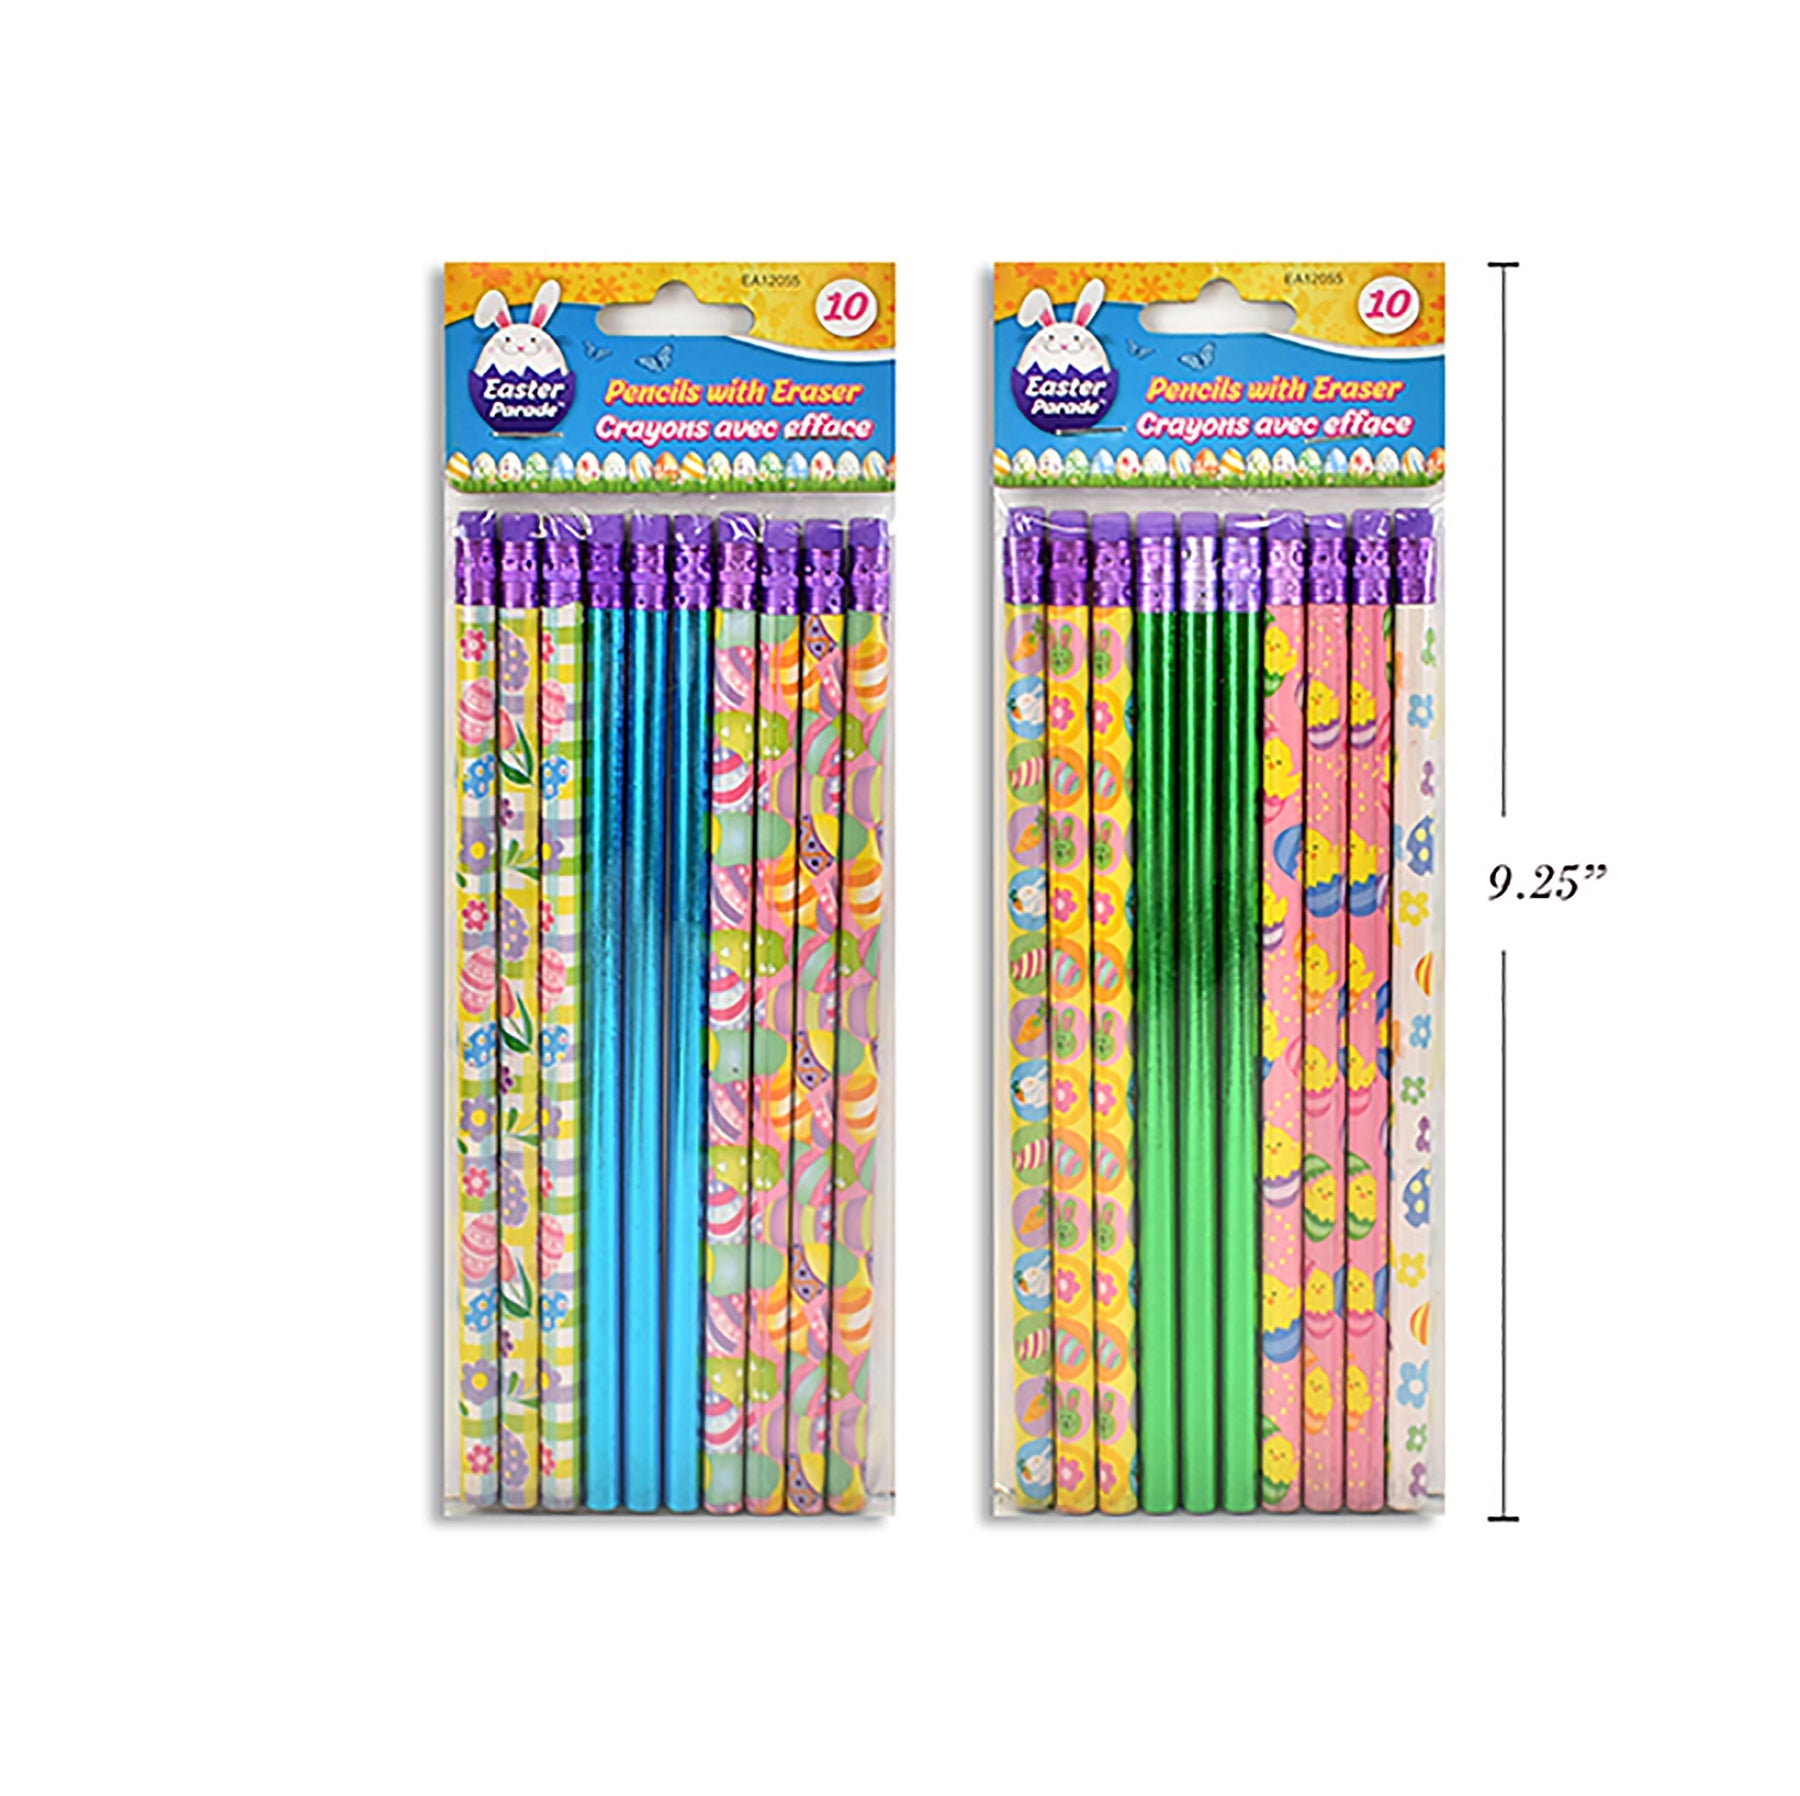 Easter 10 Design Pencils with Eraser 7.37in